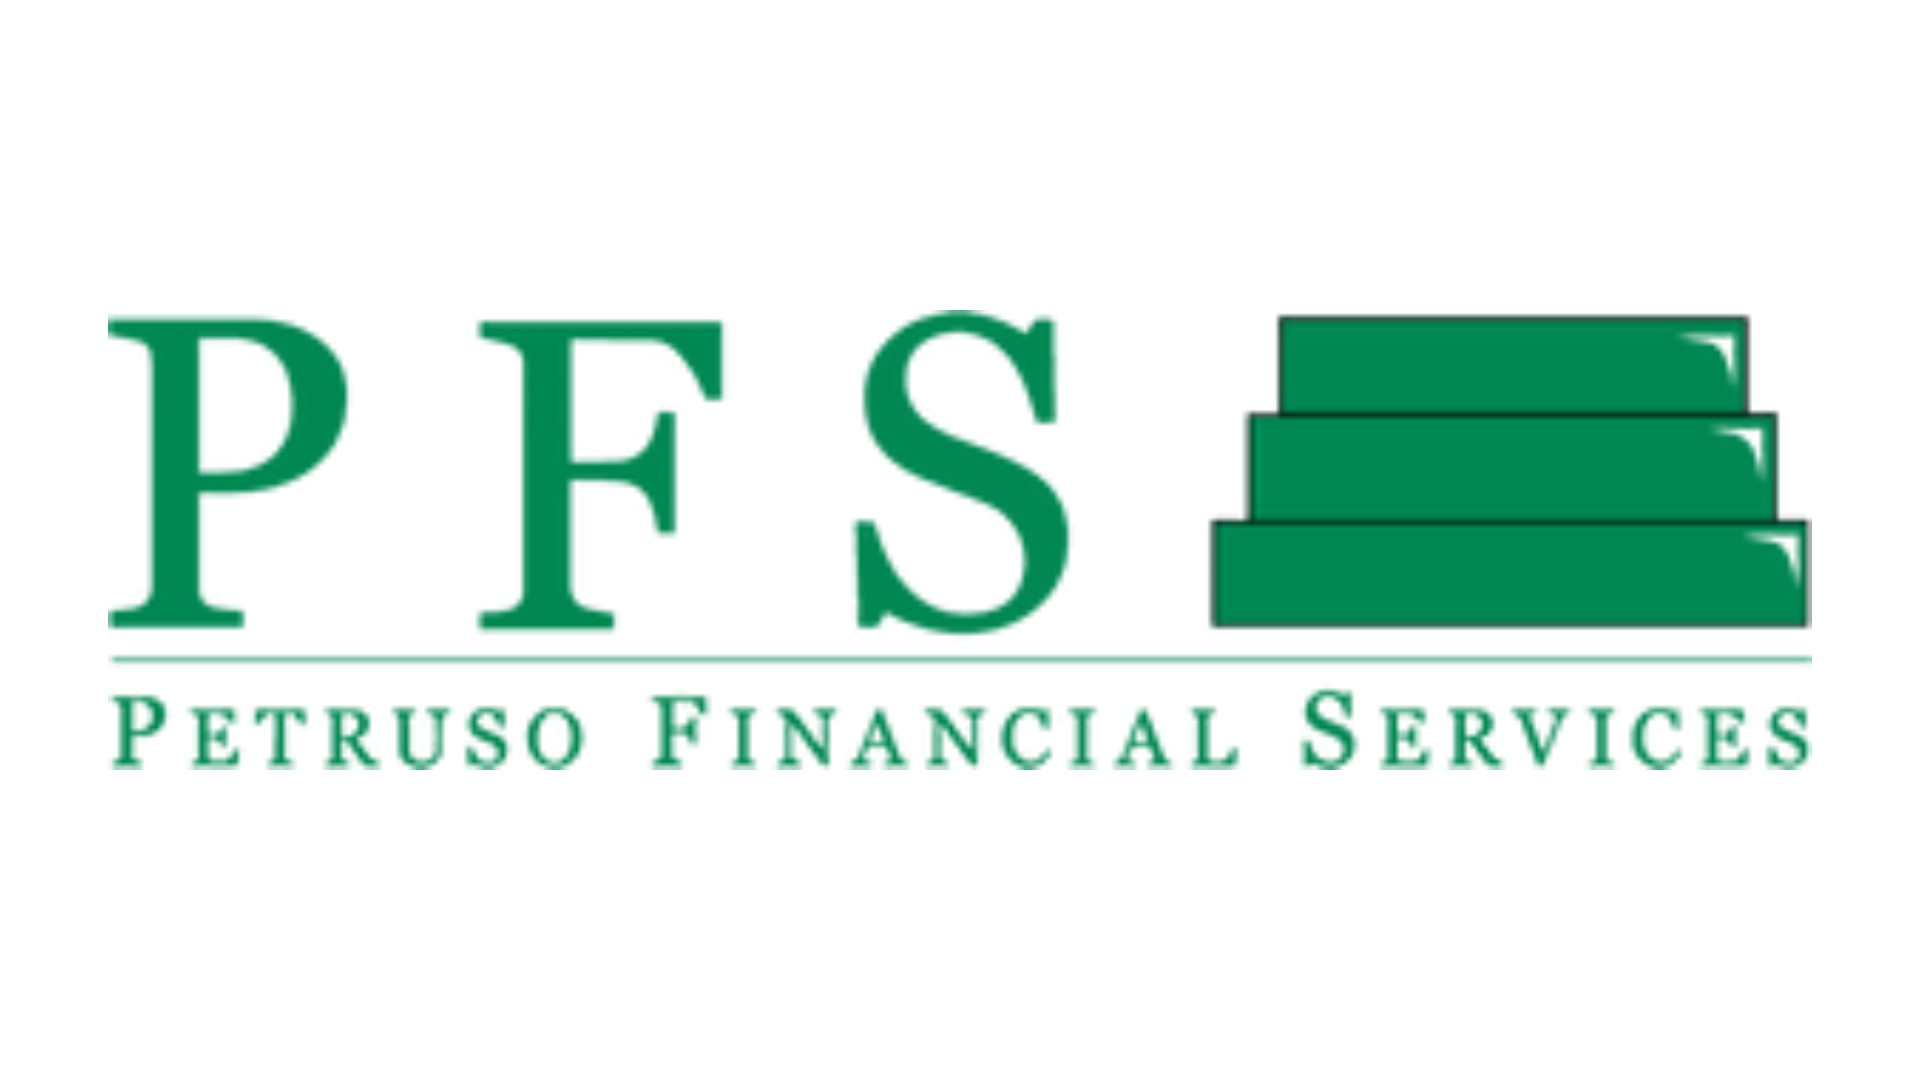 BIRCH Petruso Financial Services